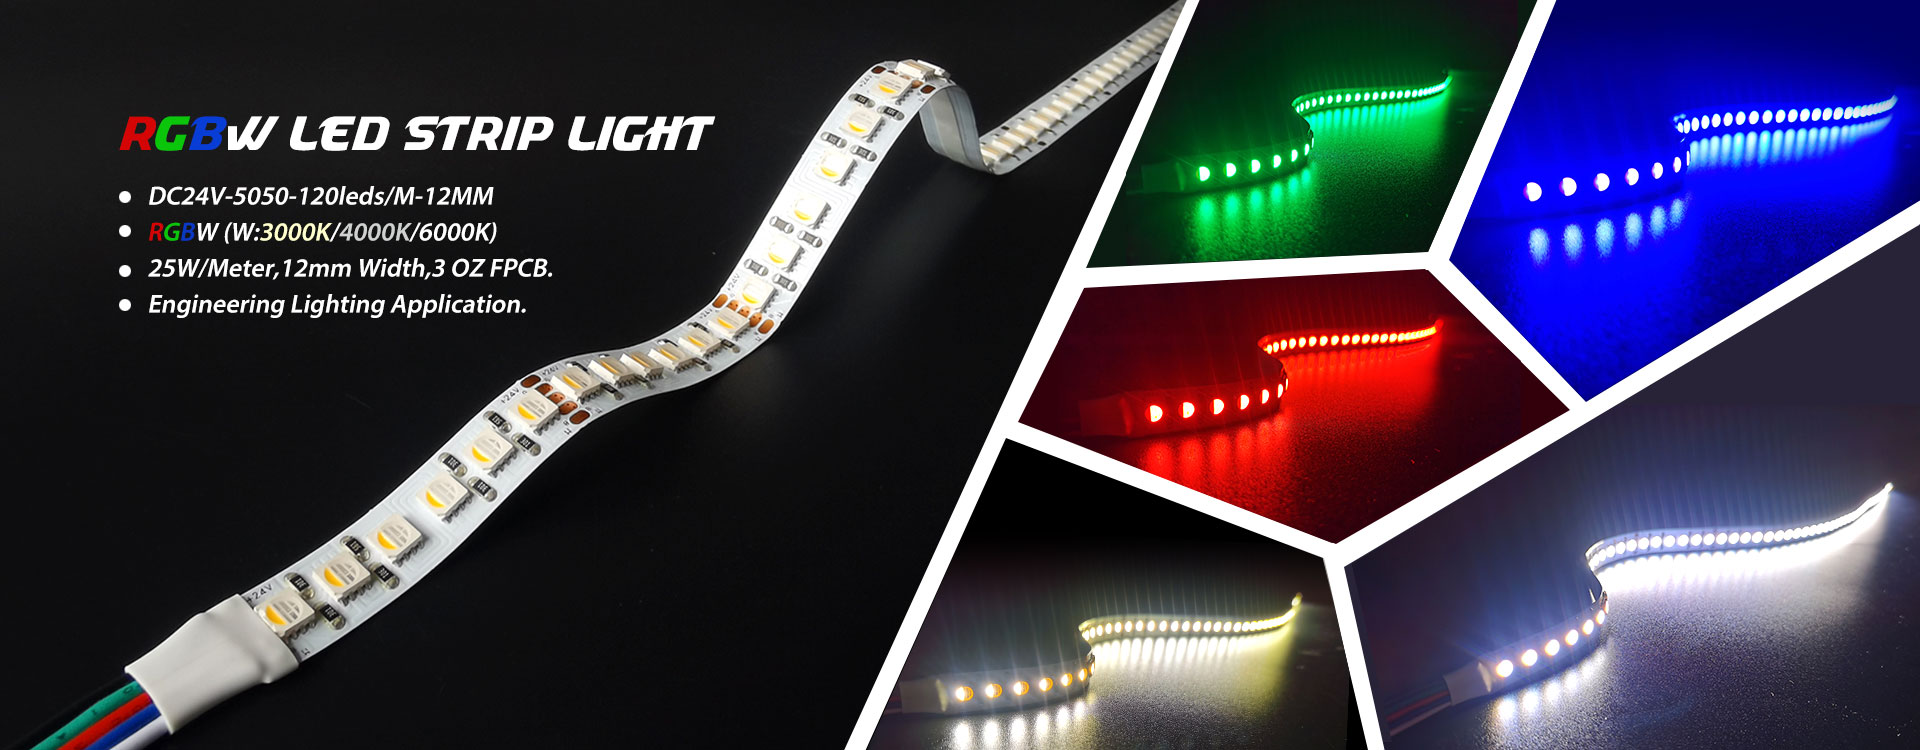 RGBW LED Strip Light